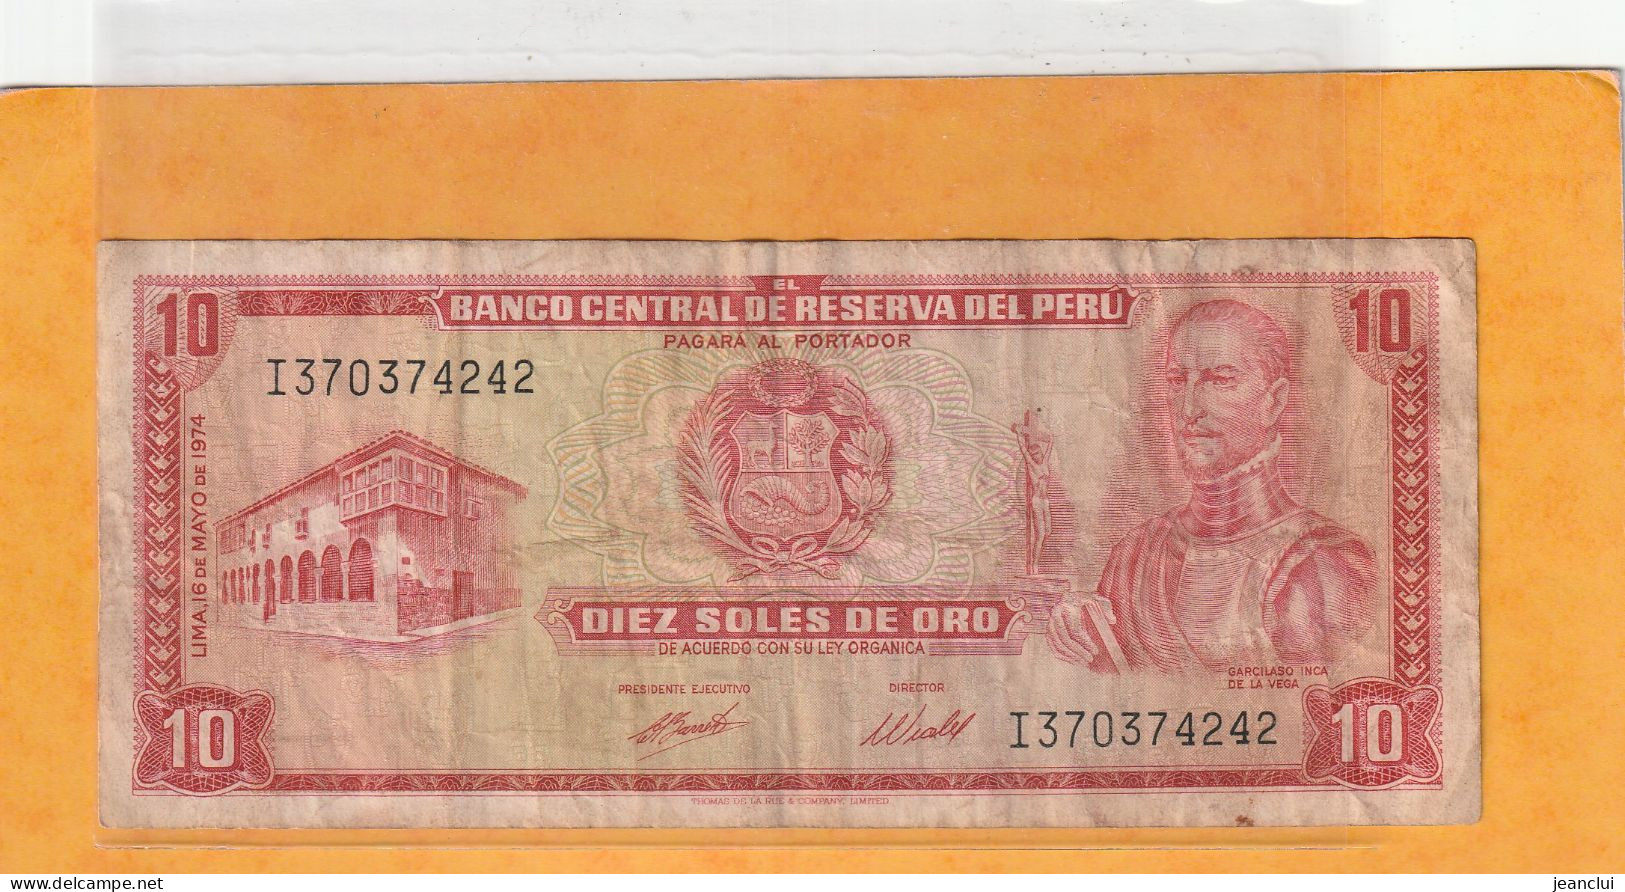 BANCO CENTRAL DE RESERVA DEL PERU .  10 SOLES DE ORO  .  16 DE MAYO DE 1974  . N°  I 3703742 .  2 SCANNES  .  ETAT USITE - Perù